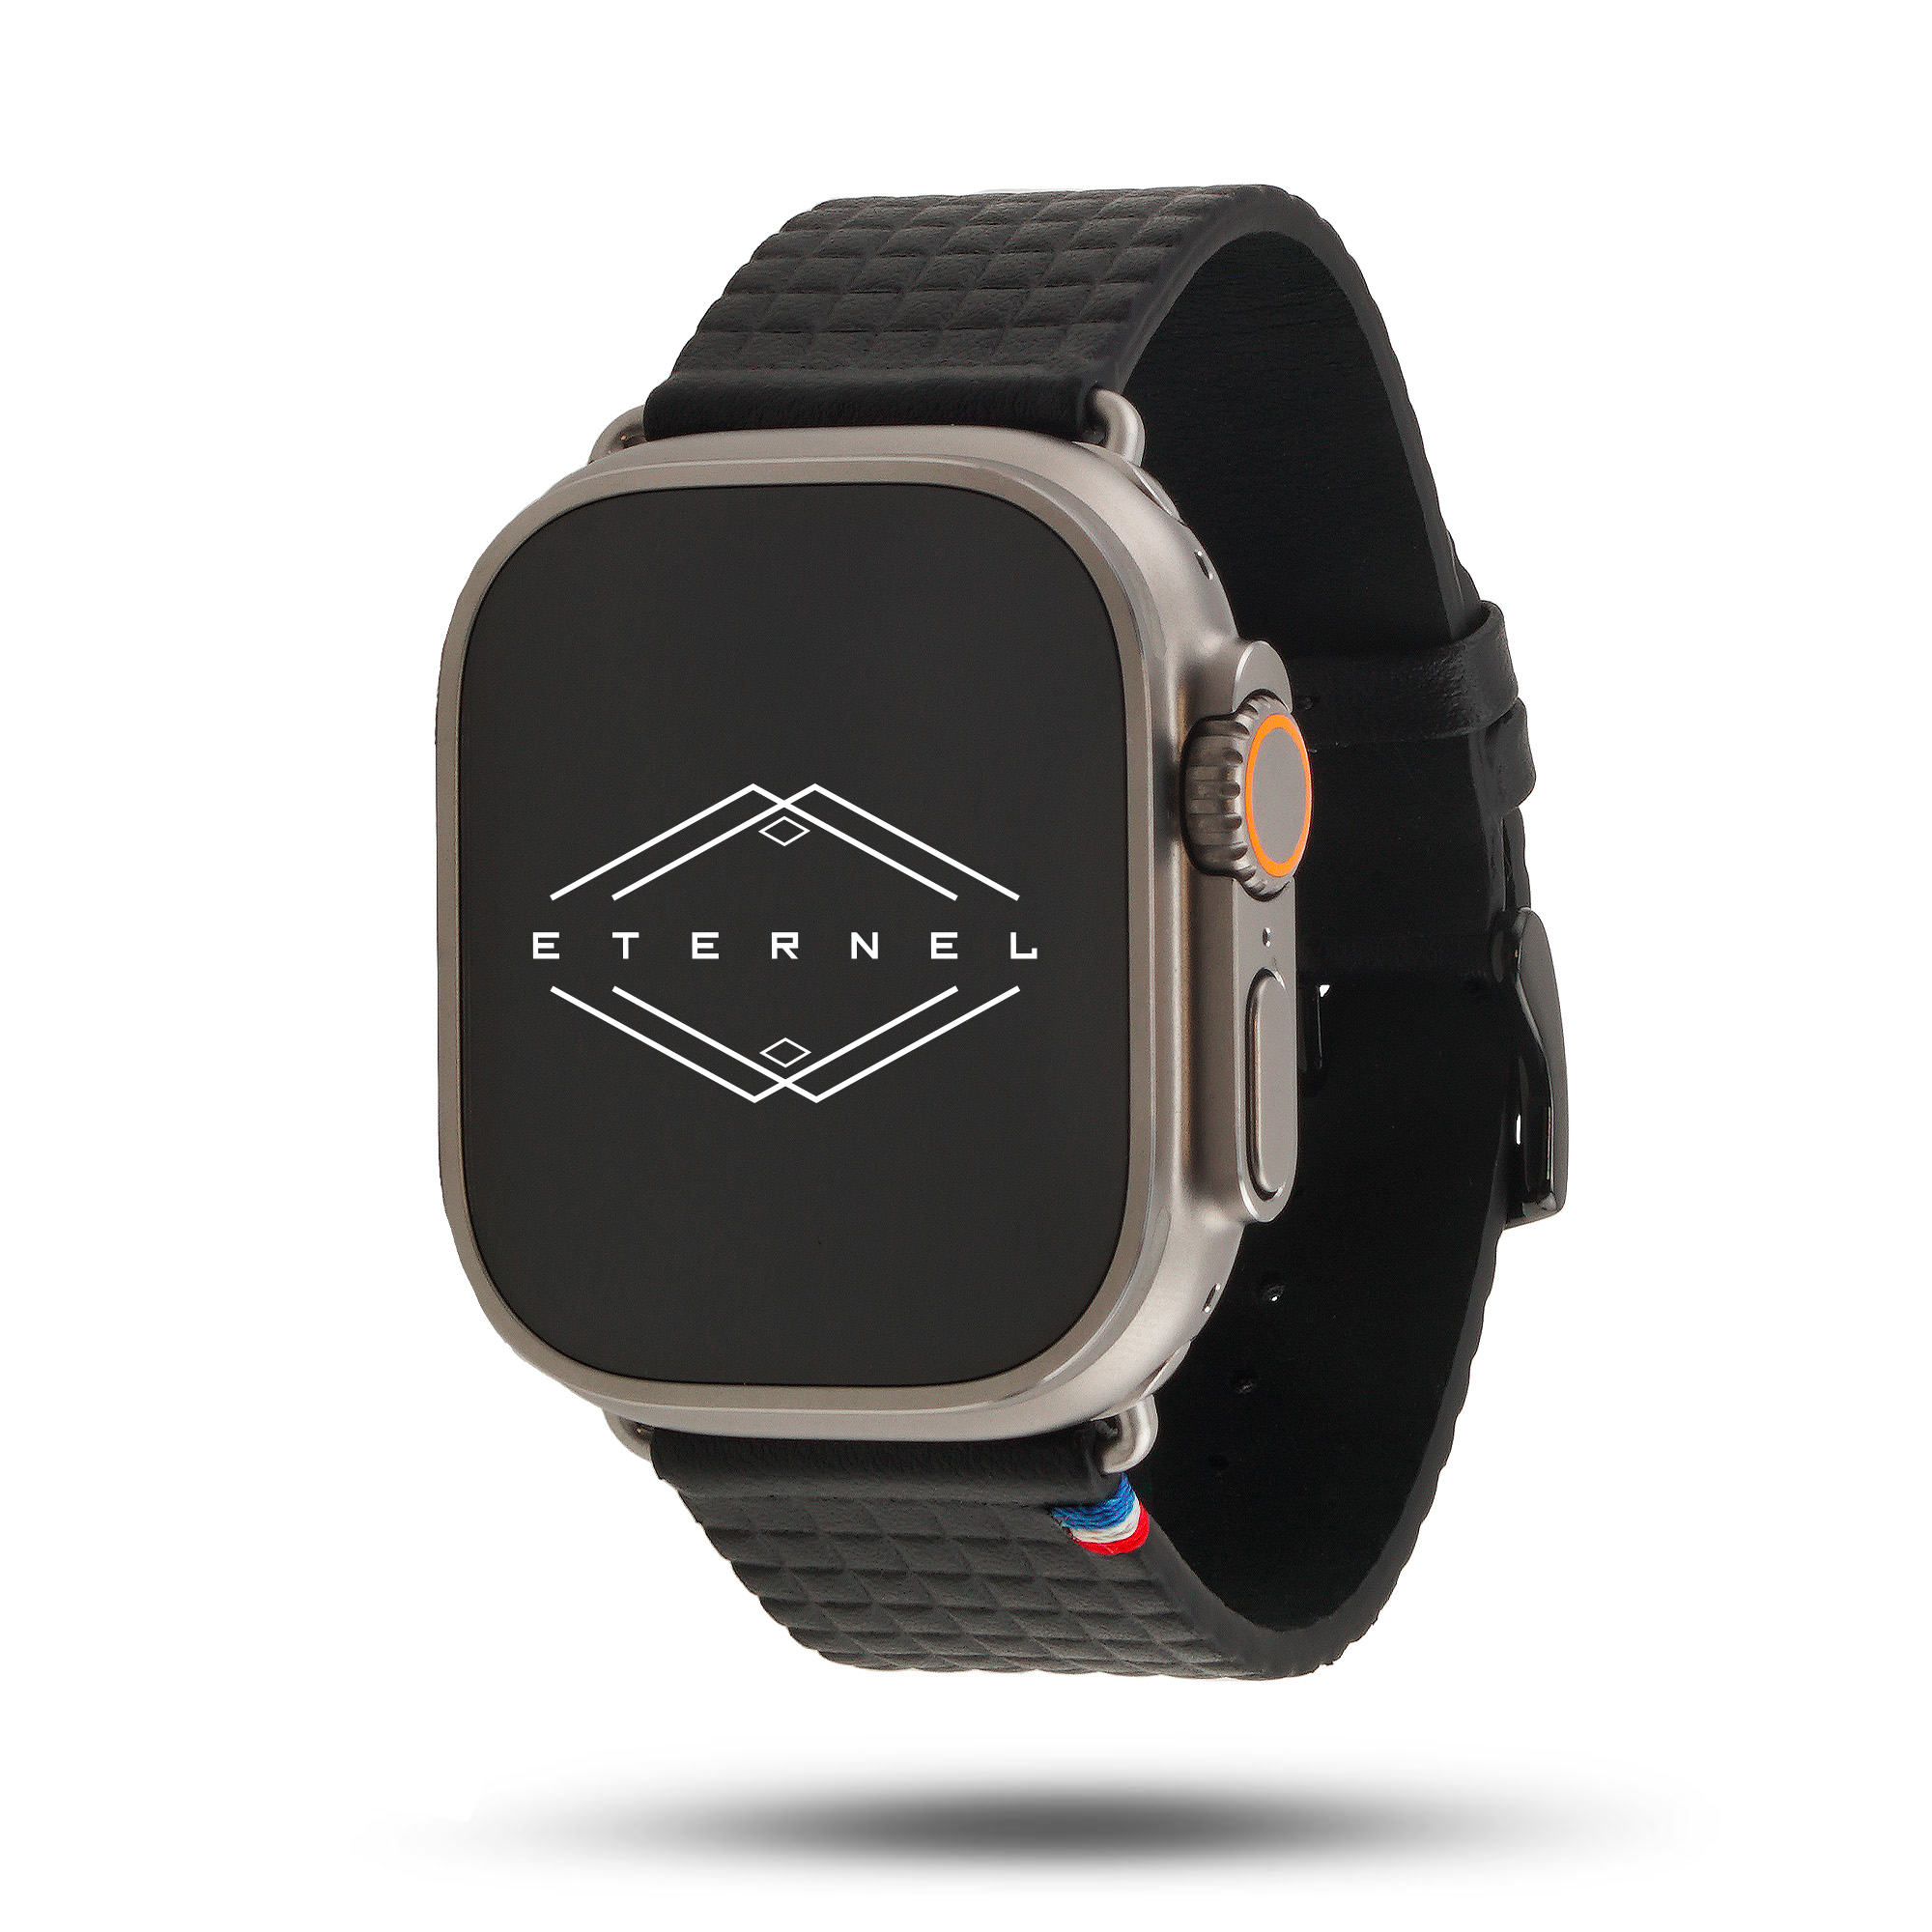 Carbone - Bracelet Apple Watch cuir motif damier - Made in France